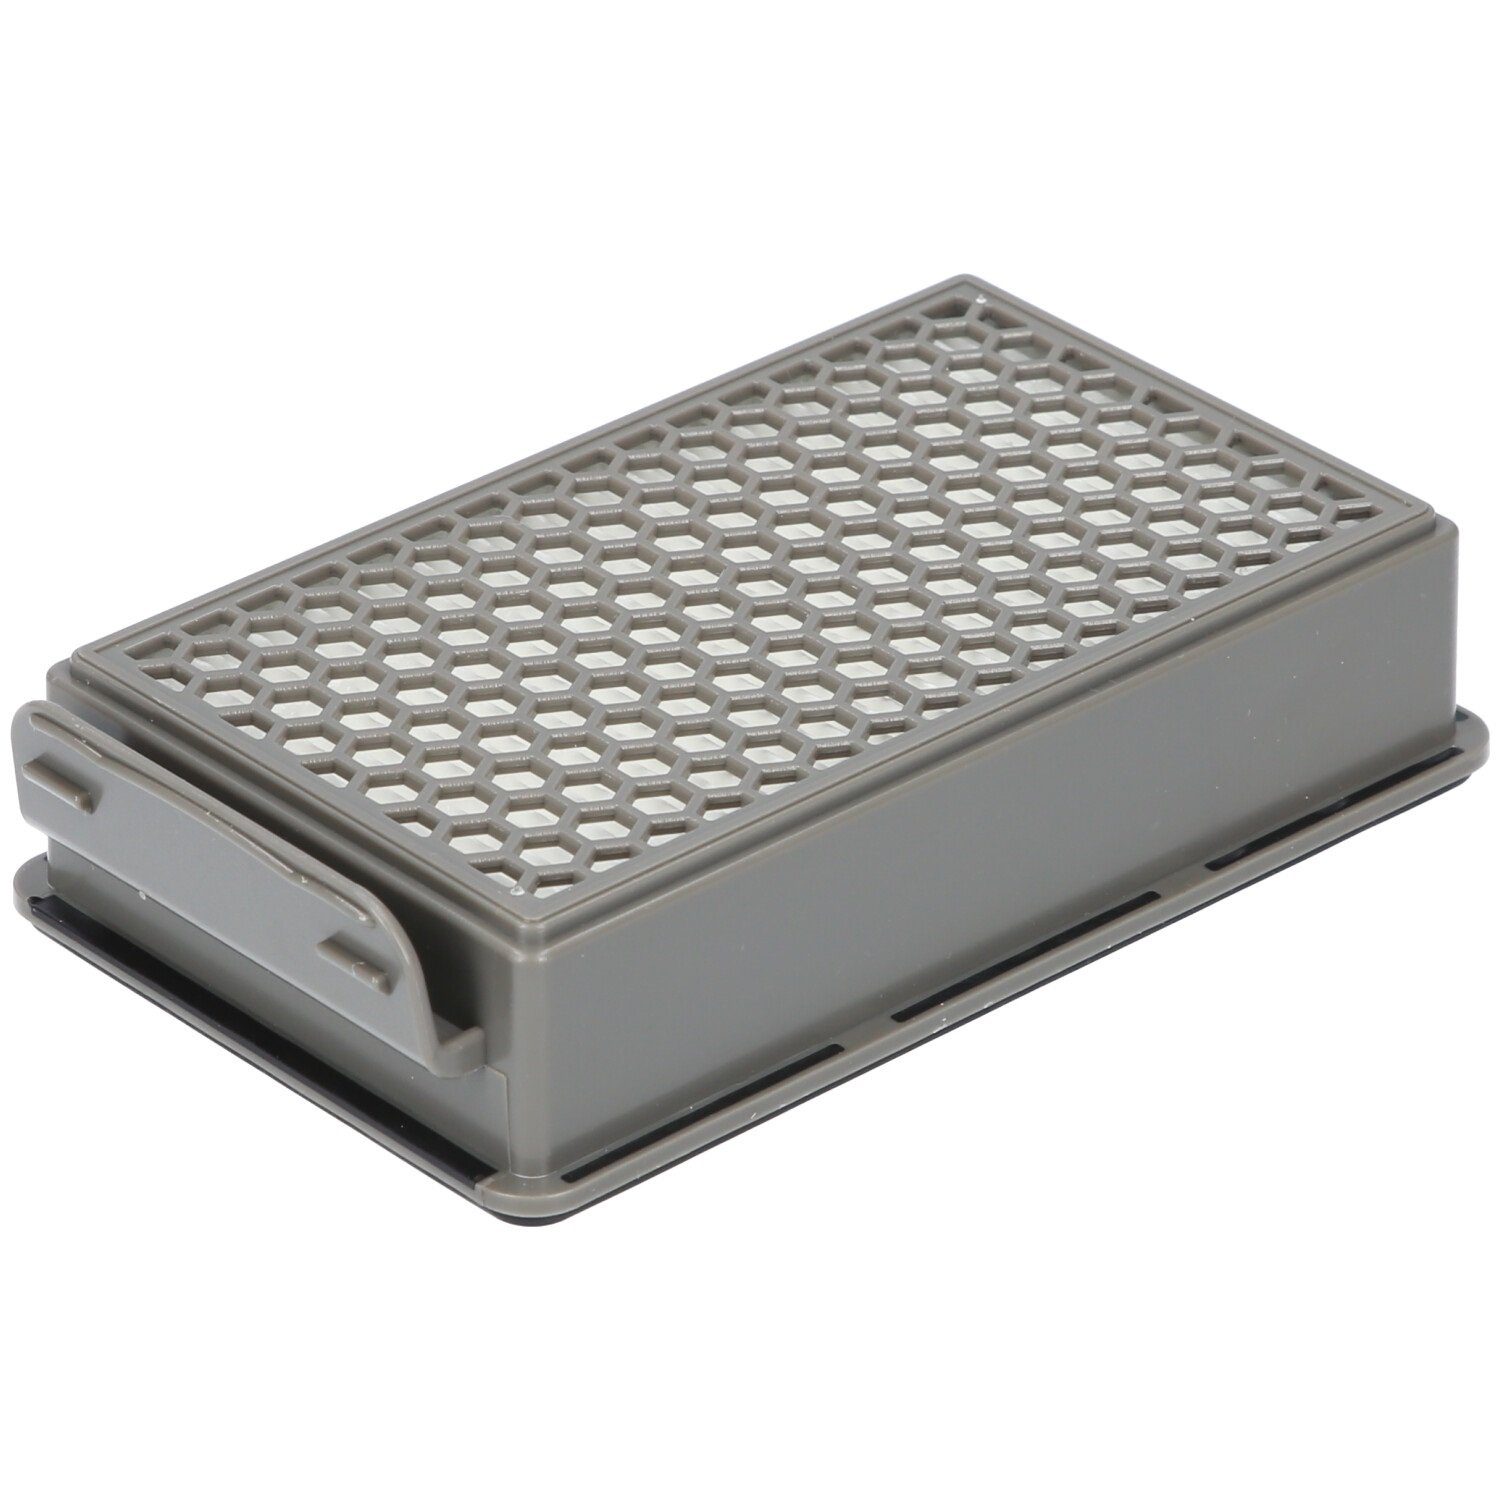 TW3969EA, Alternative 2x Filter-Set ZR005901 2x TW3931EA, für McFilter für geeignet TW3953EA, Filterkassette, TW3985EA,TW3999EA, Rundfilter, Tefal